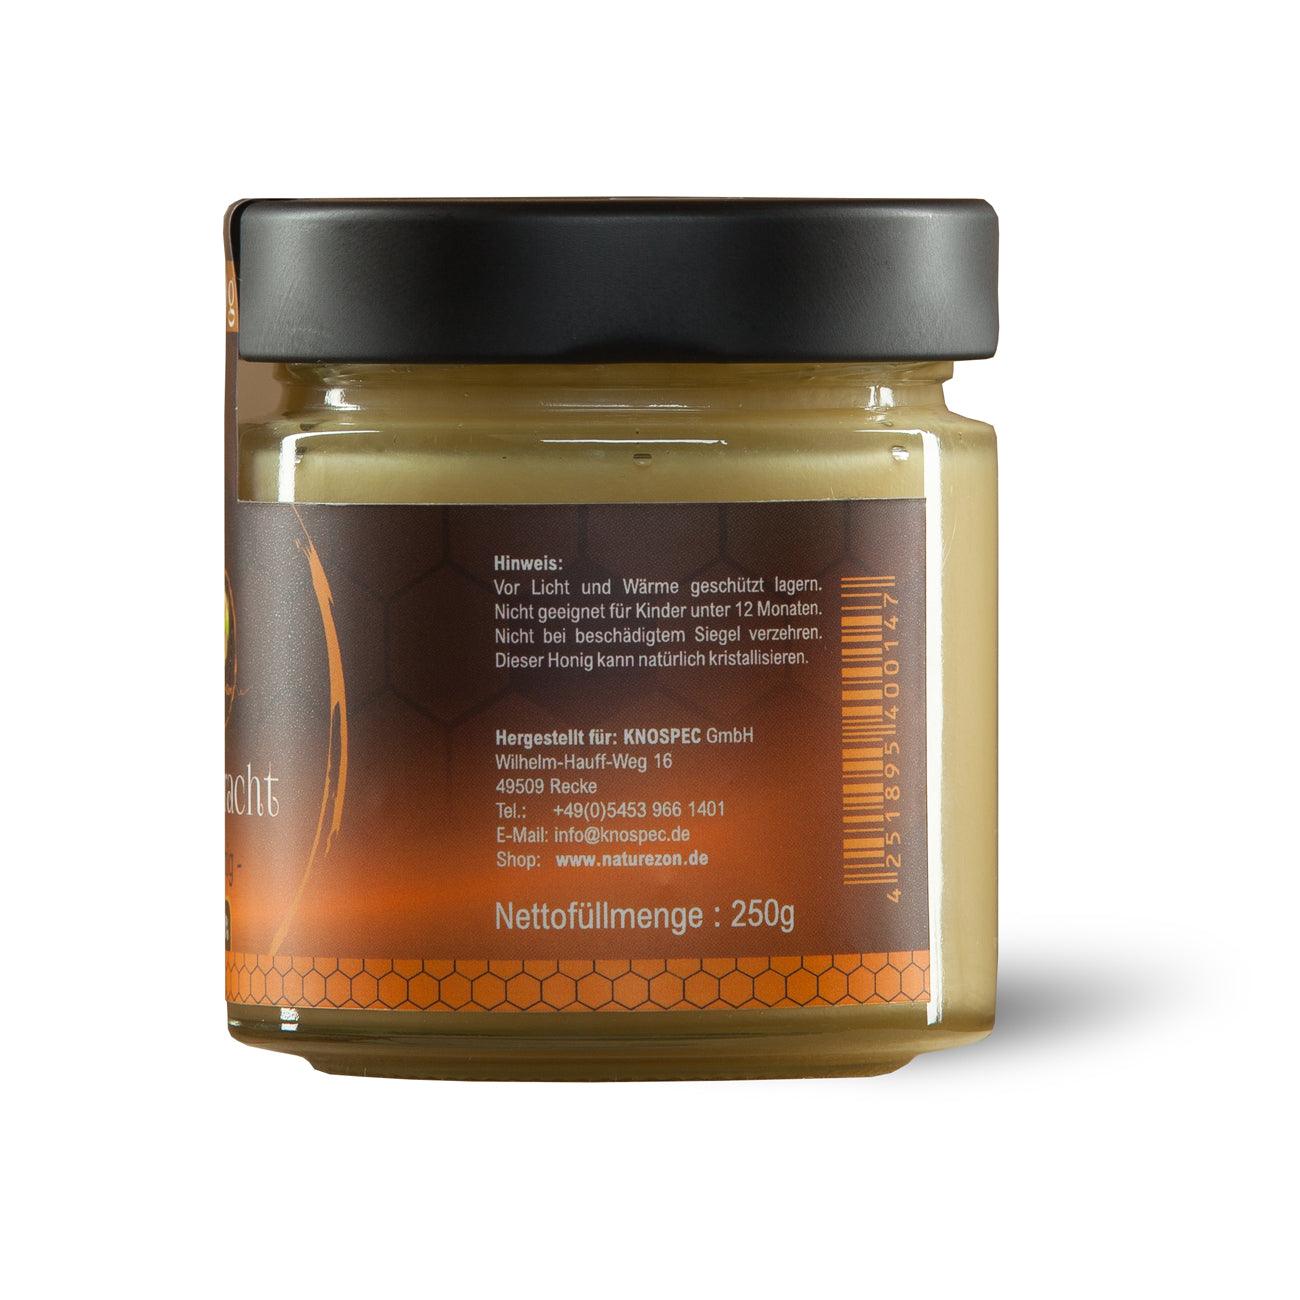 Naturezon® Honig Frühtracht 250 g - bever-naturversand